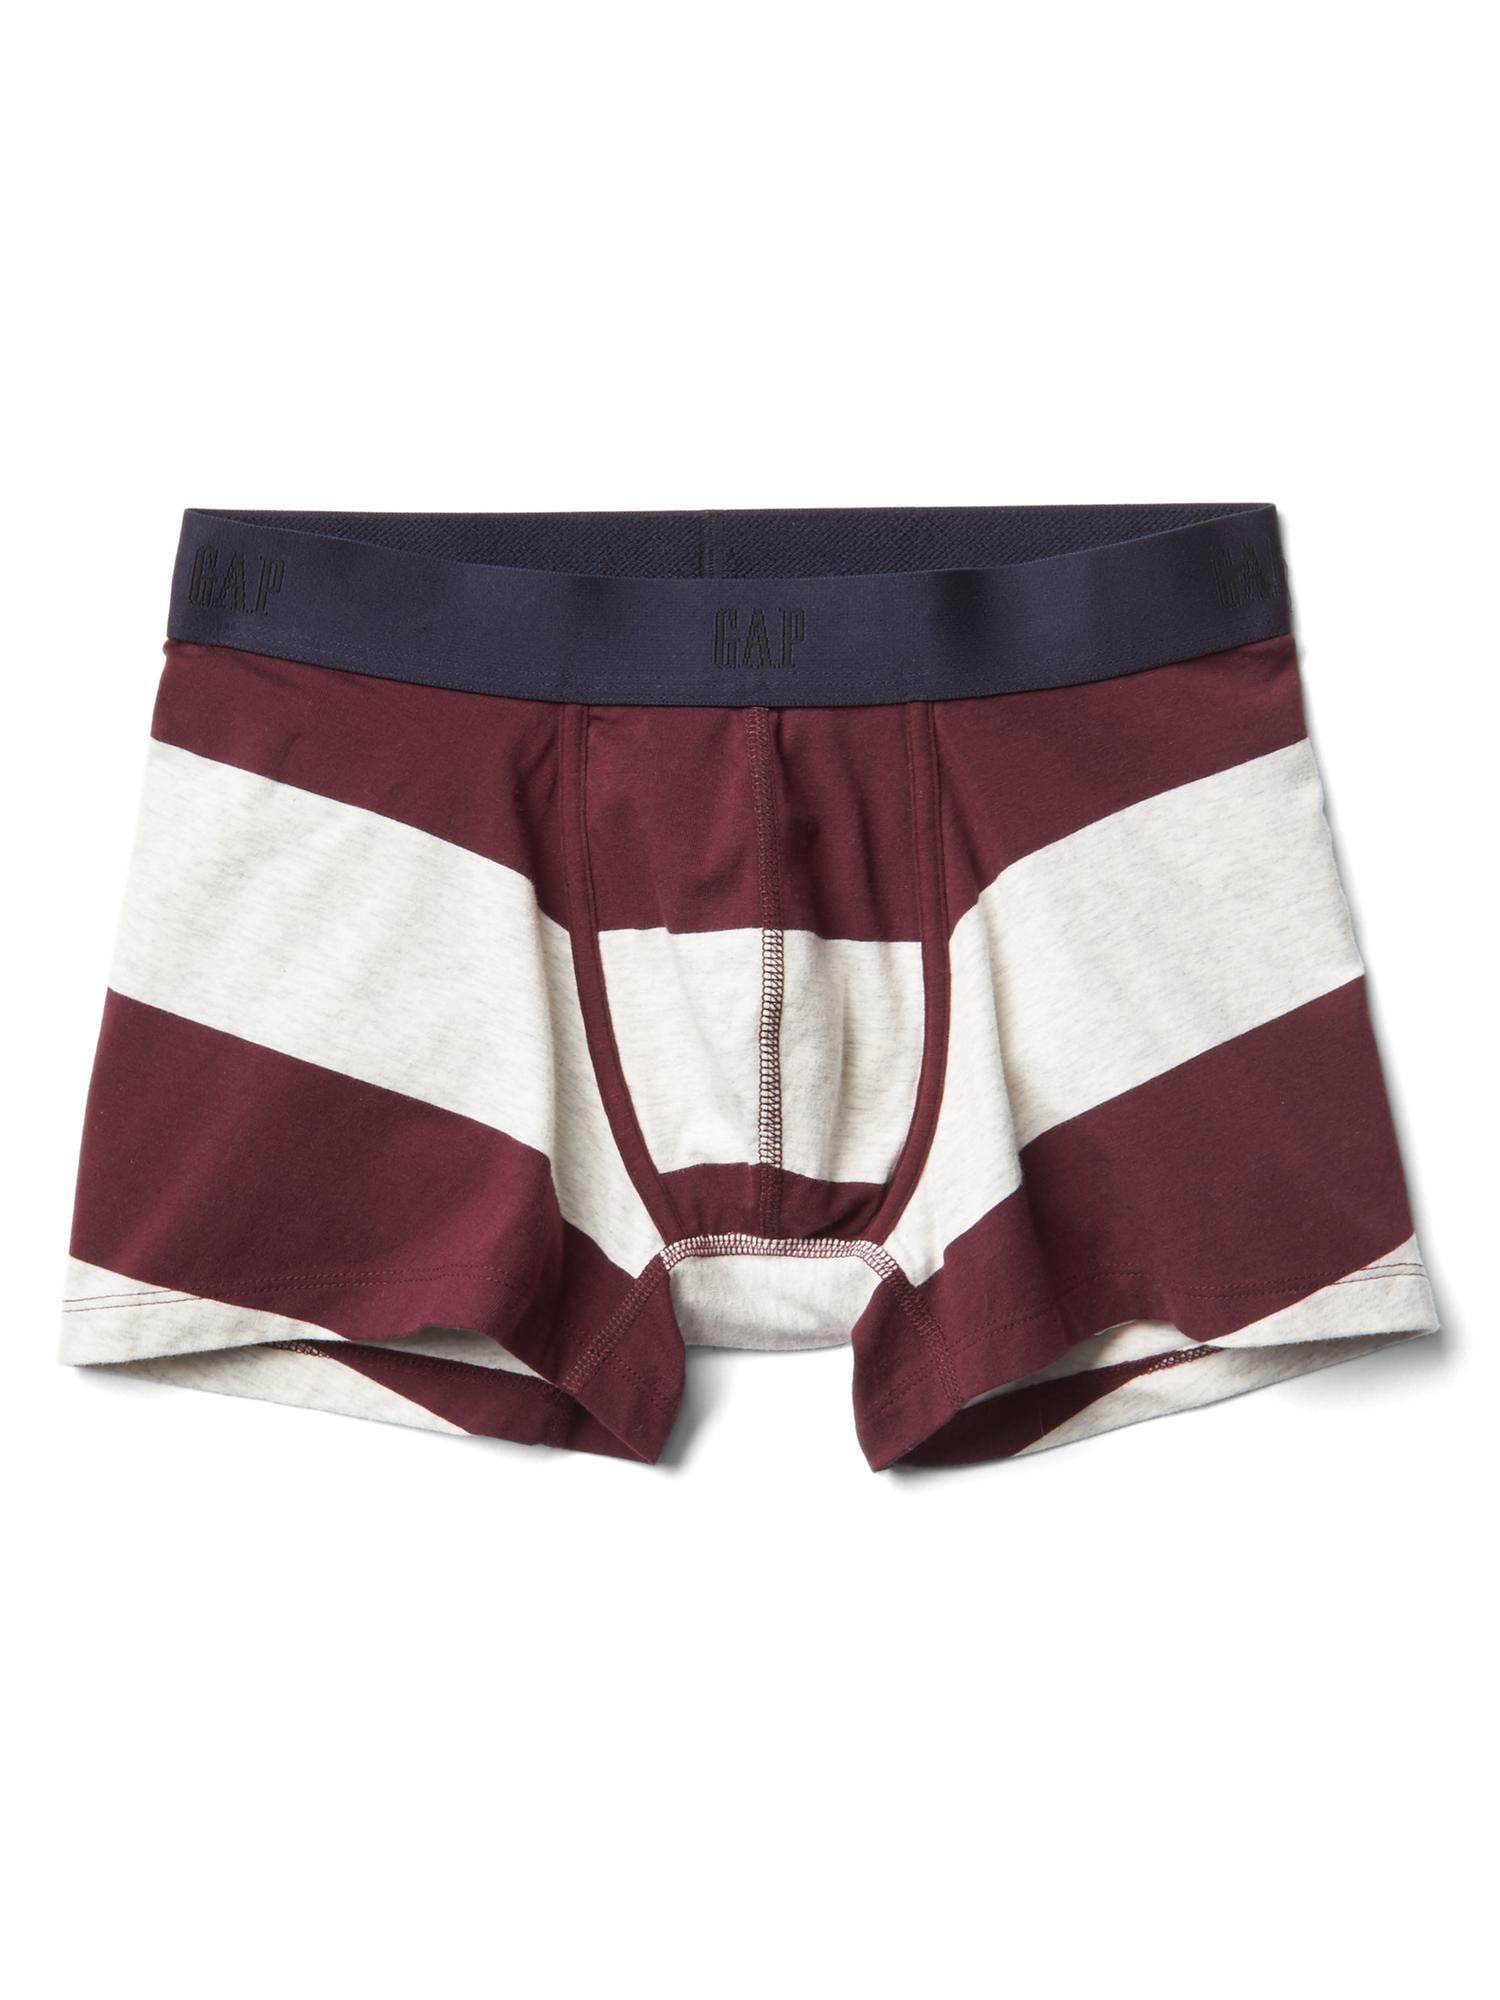 GAP Boxers Men's 3-Pack Boxer Shorts Size XL Extra Large Underwear Set  (Pizza Slices, Movie Logo, Camo Camouflage) 